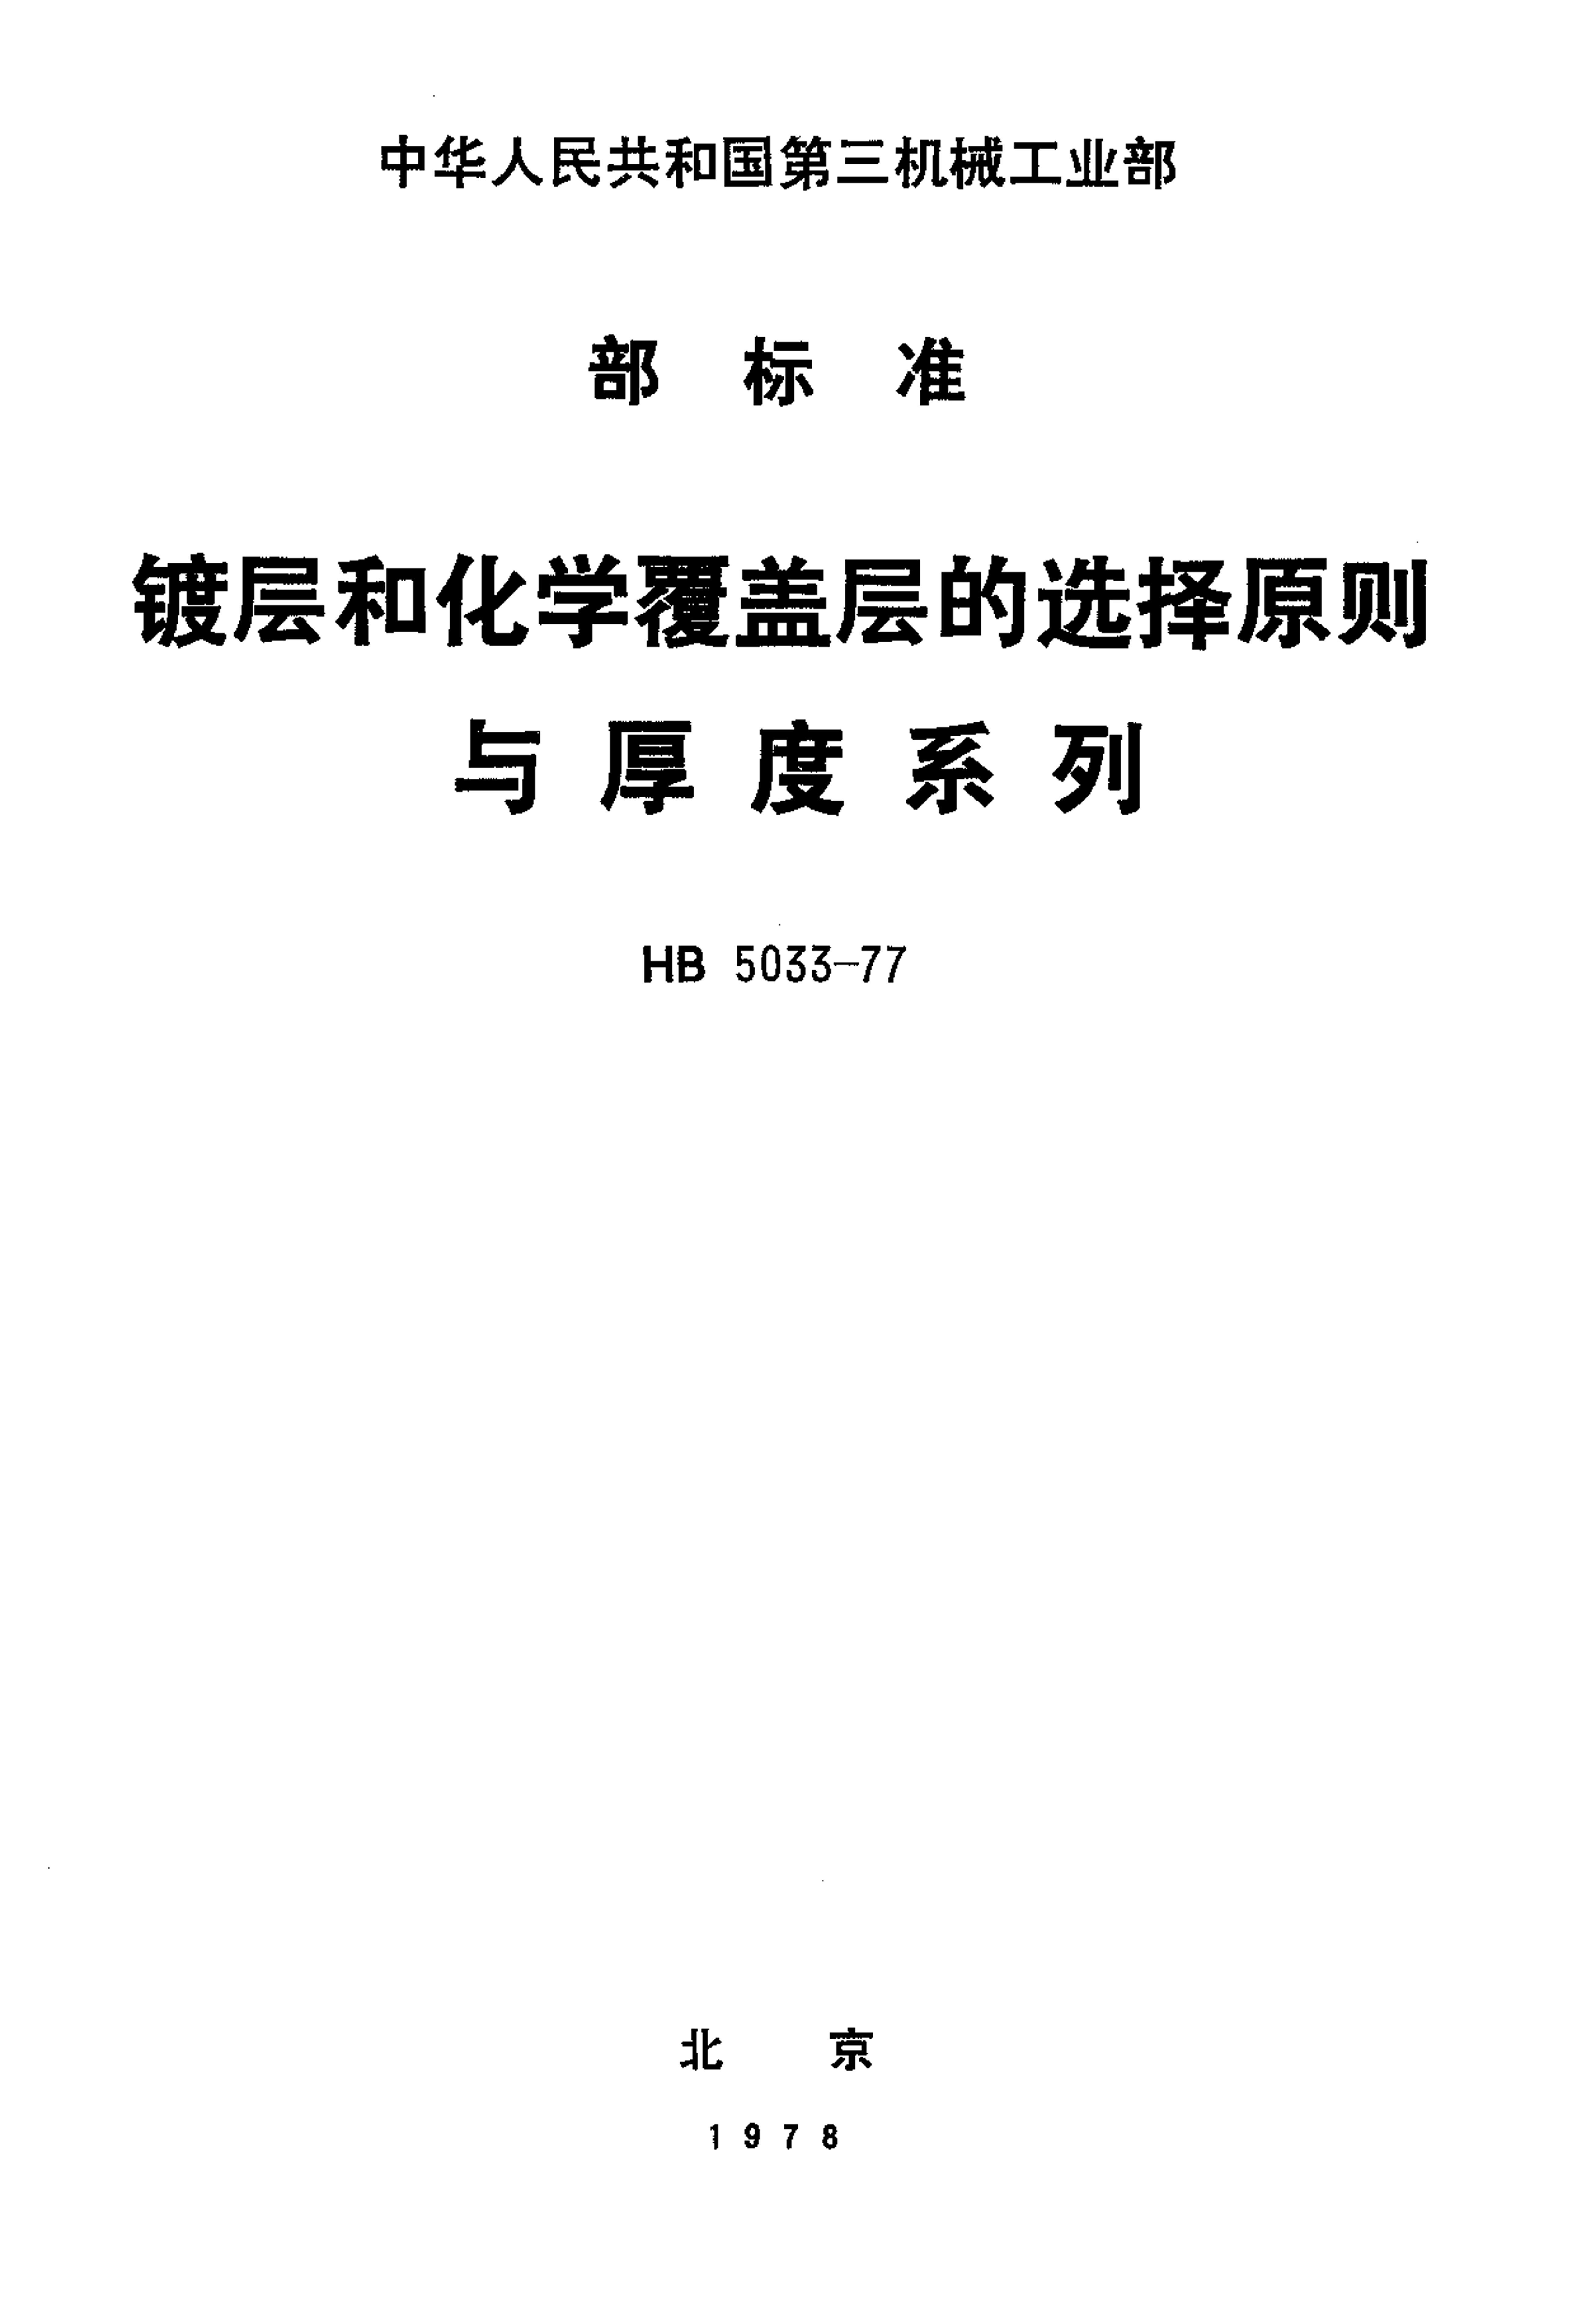 HB 5033-1977 Ʋͻѧǲѡԭϵ.pdf1ҳ